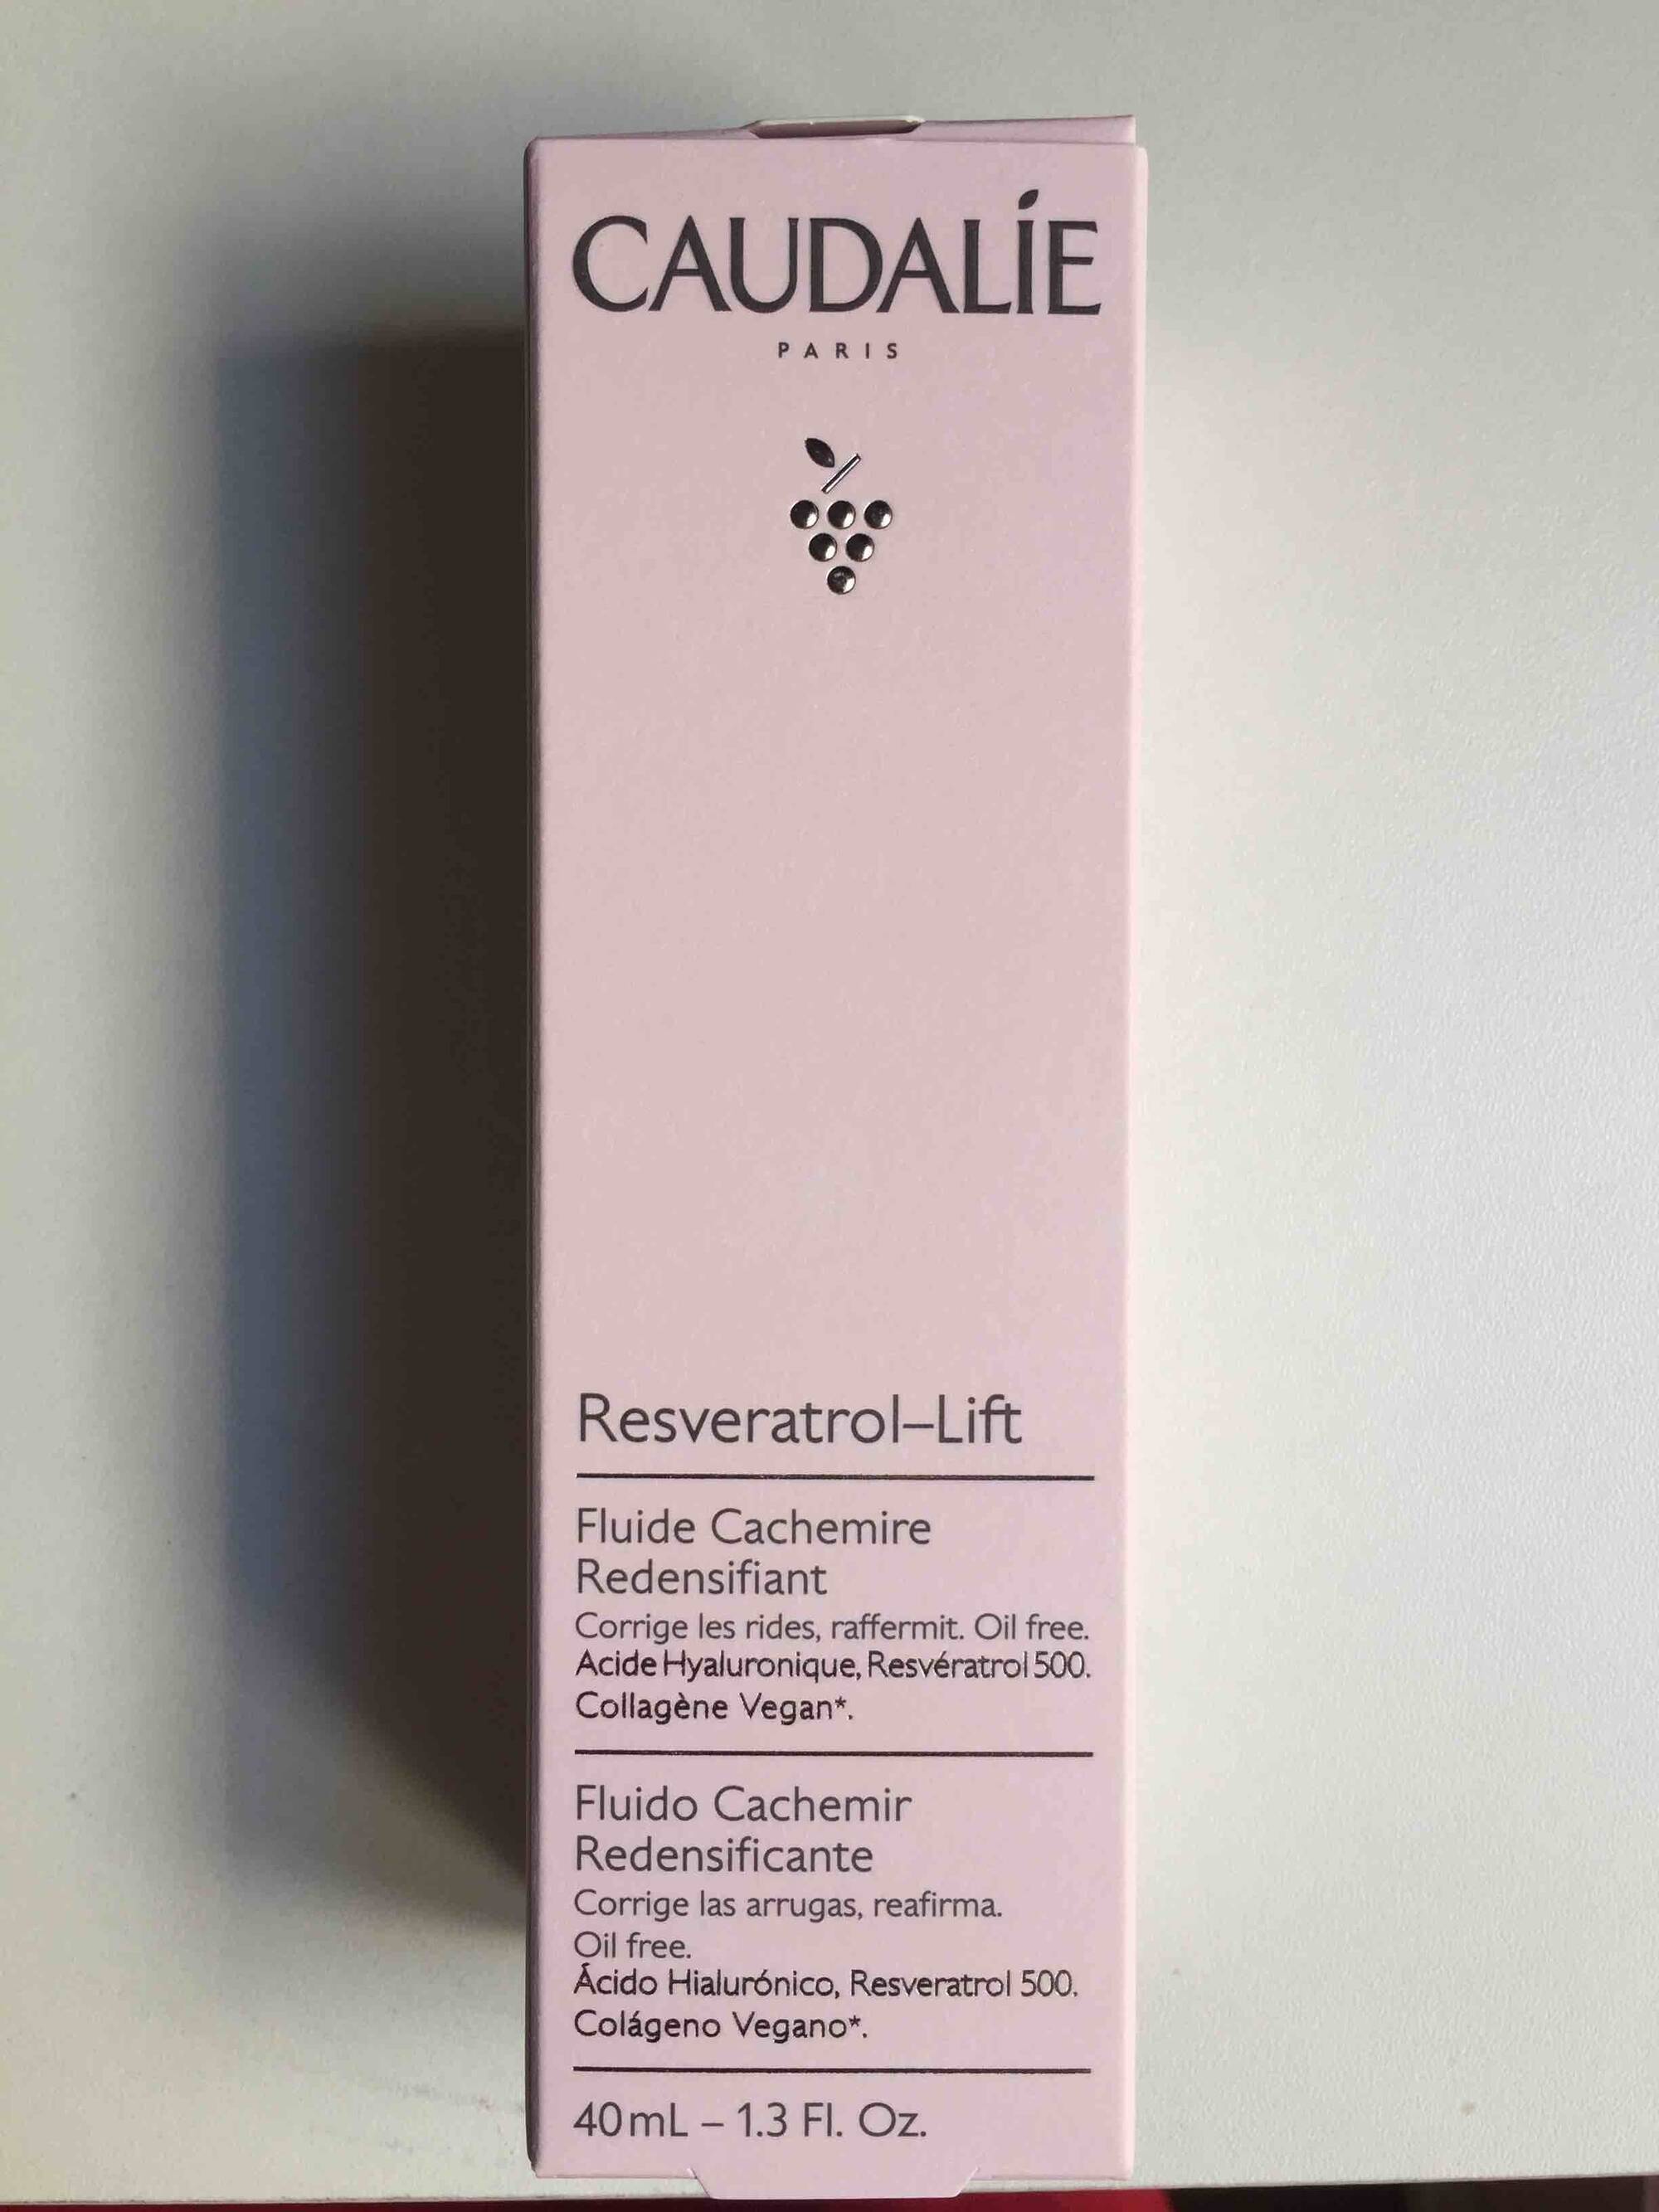 CAUDALIE - Resveratrol-Lift - Fluide cachemire redensifiant